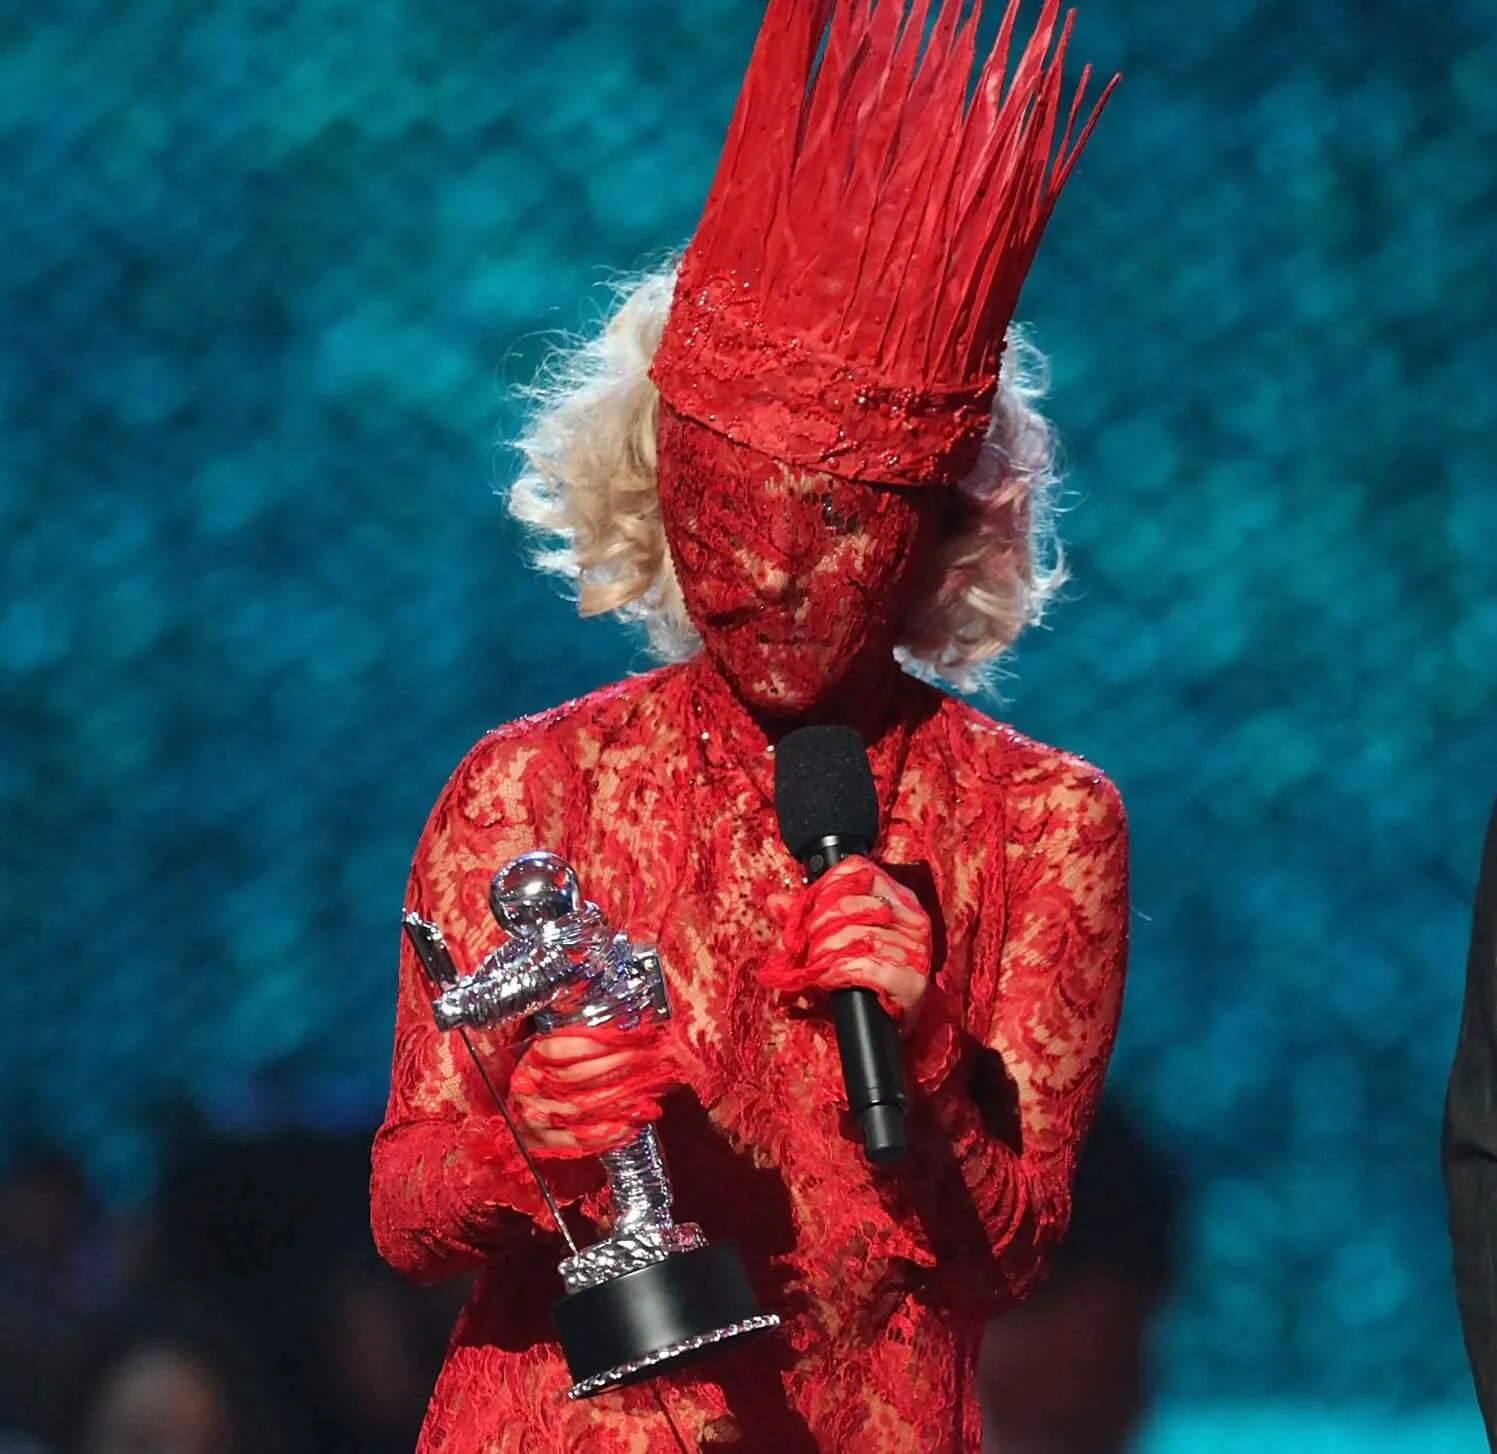 "Bad Romance" singer Lady Gaga wearing a red mask